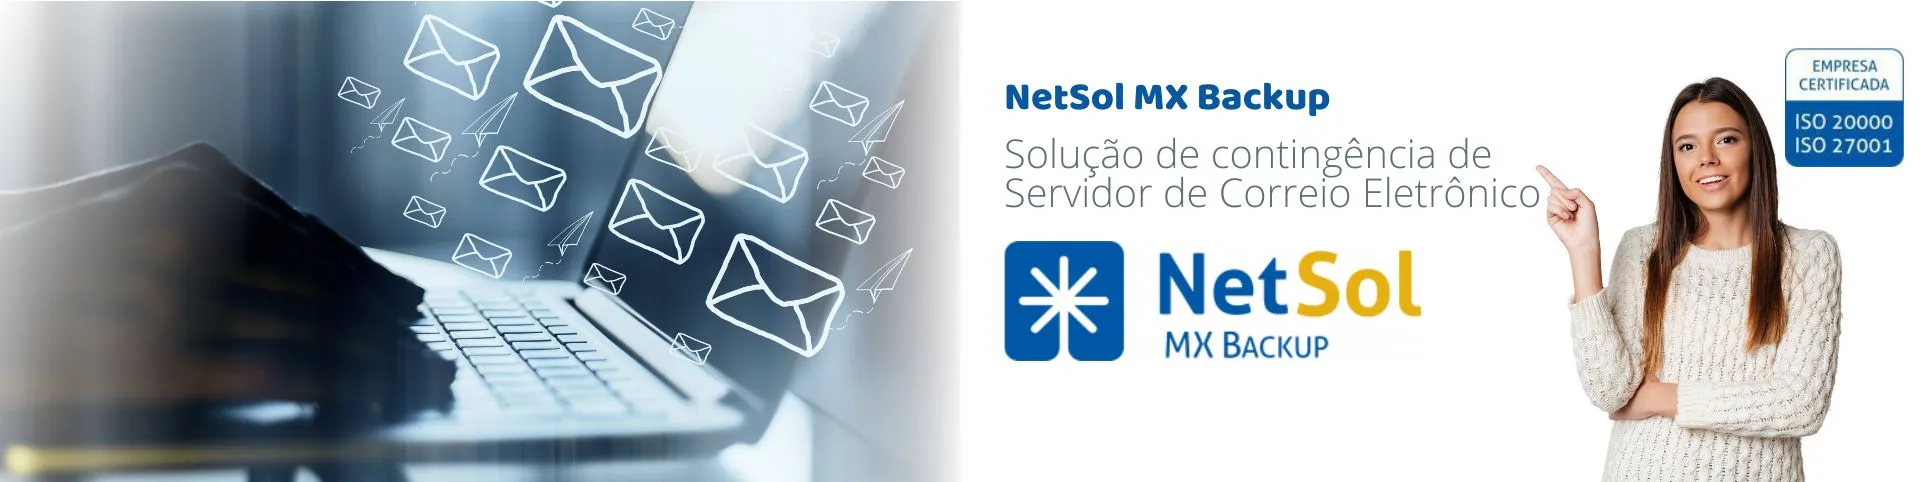 NetSol_MX_Backup